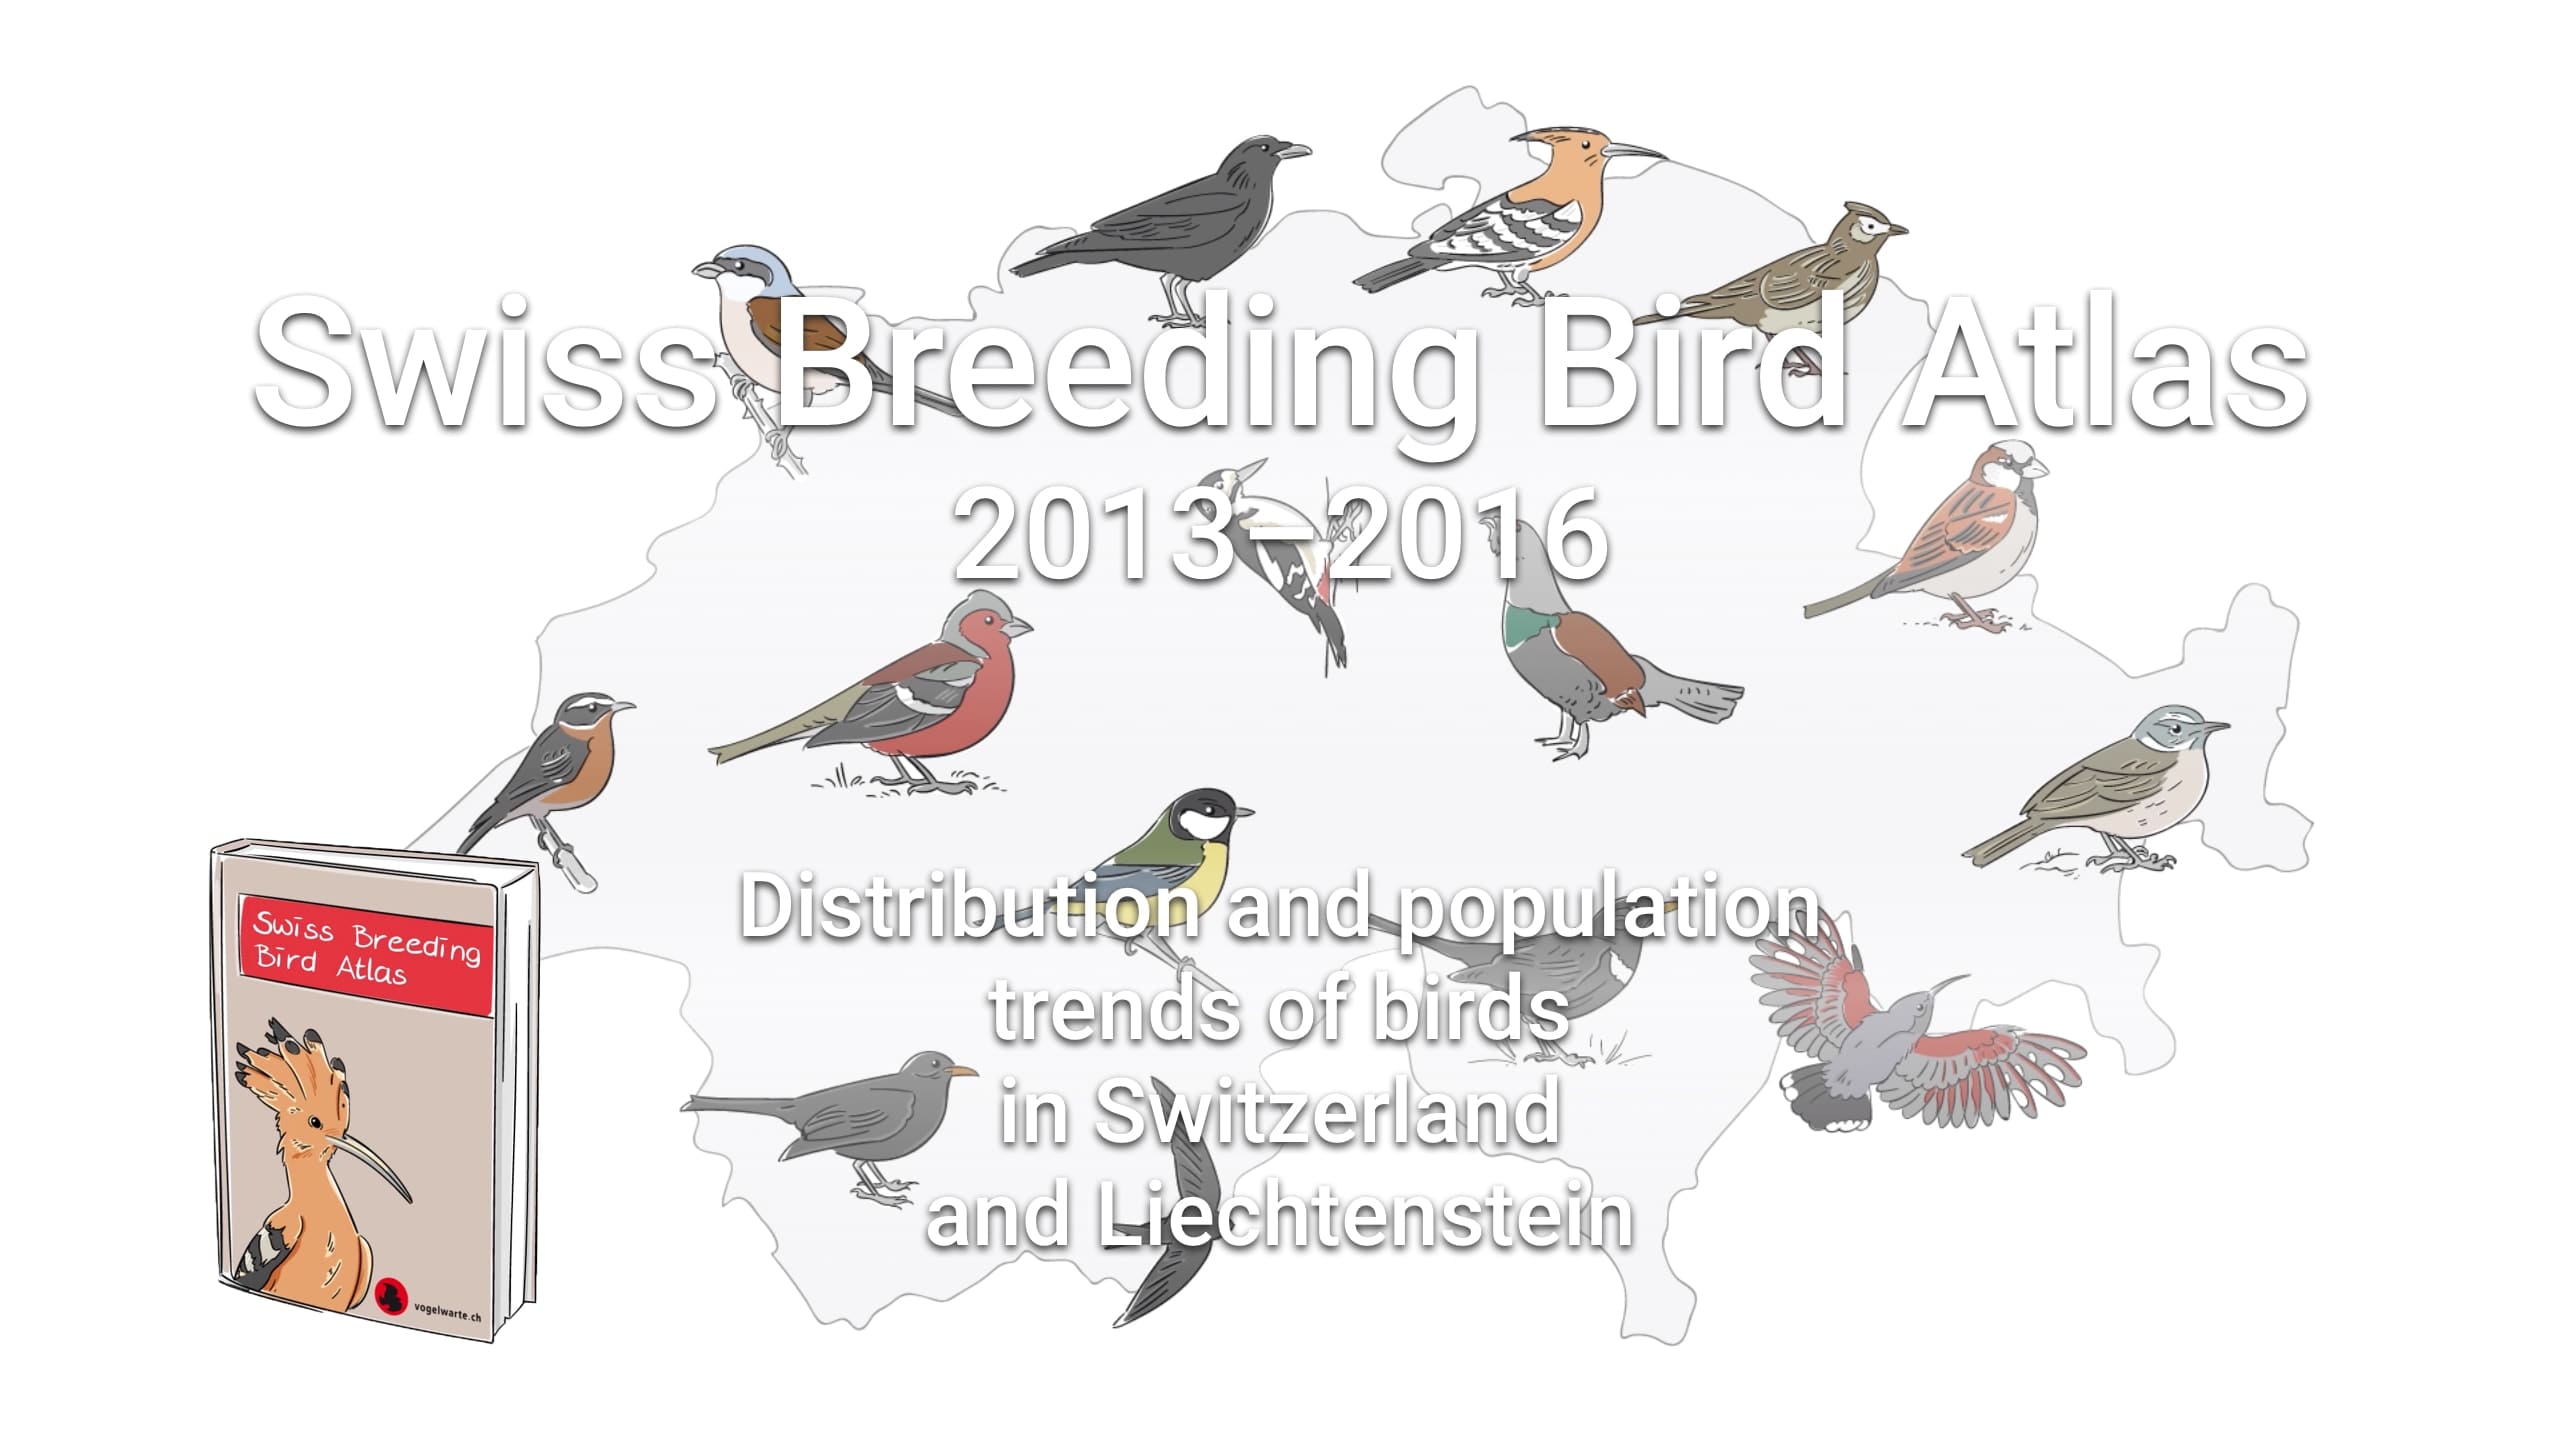 Swiss Breeding Birds Atlas (Kéry & Schmid 2006).